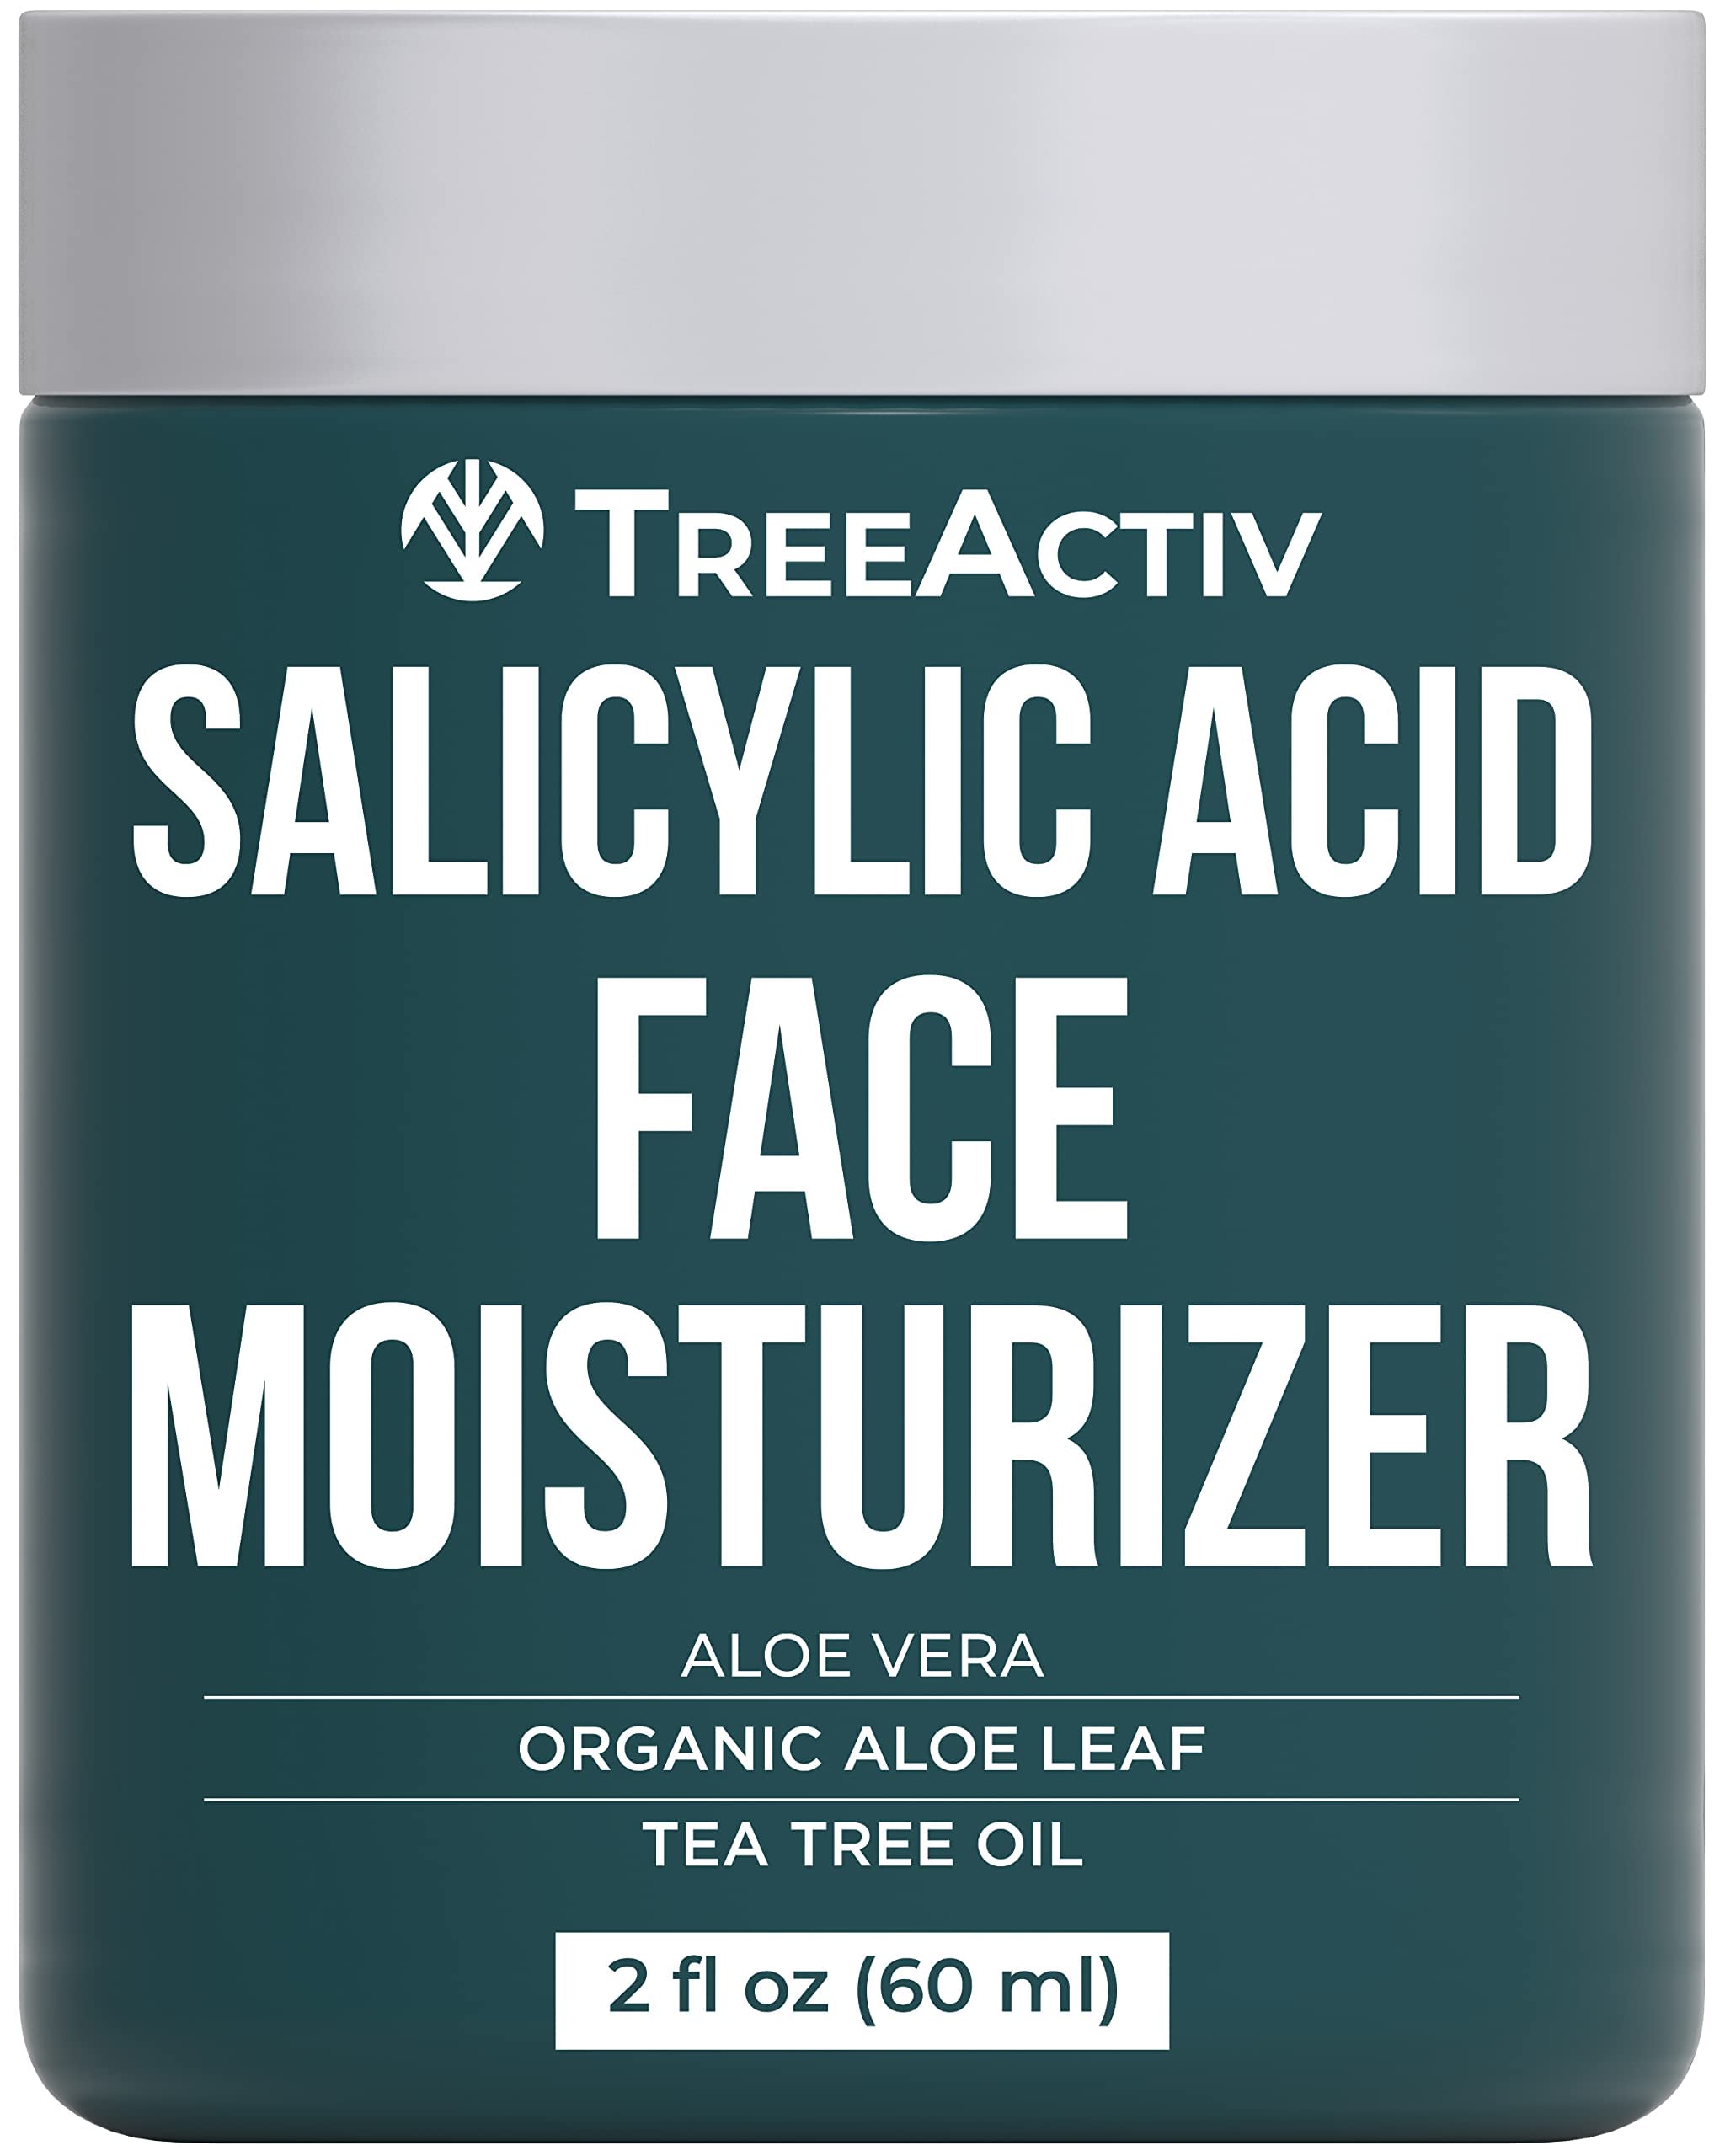 TreeActiv Salicylic Acid Face Moisturizer, 2 fl oz, Acne Treatment Face Cream for Oily Skin with and Tea Tree Oil, For Teens and